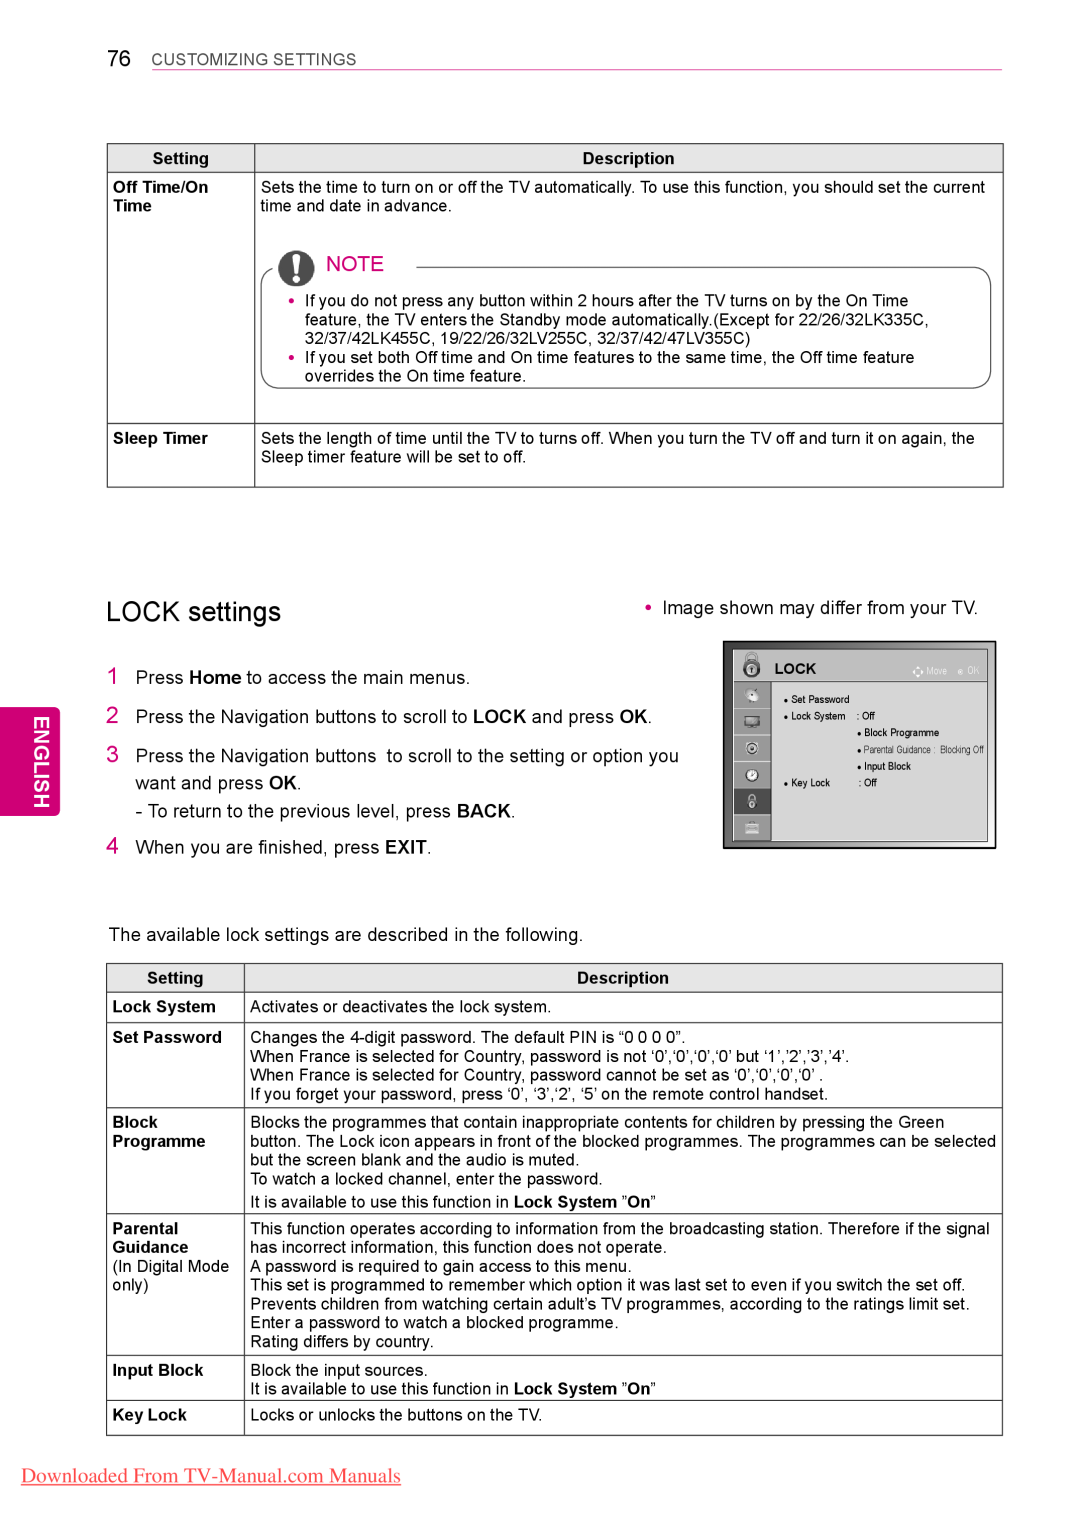 LG Electronics 42/50PT45** LOCK settings, English, Downloaded From TV-Manual.com Manuals, Customizing Settings, Time 